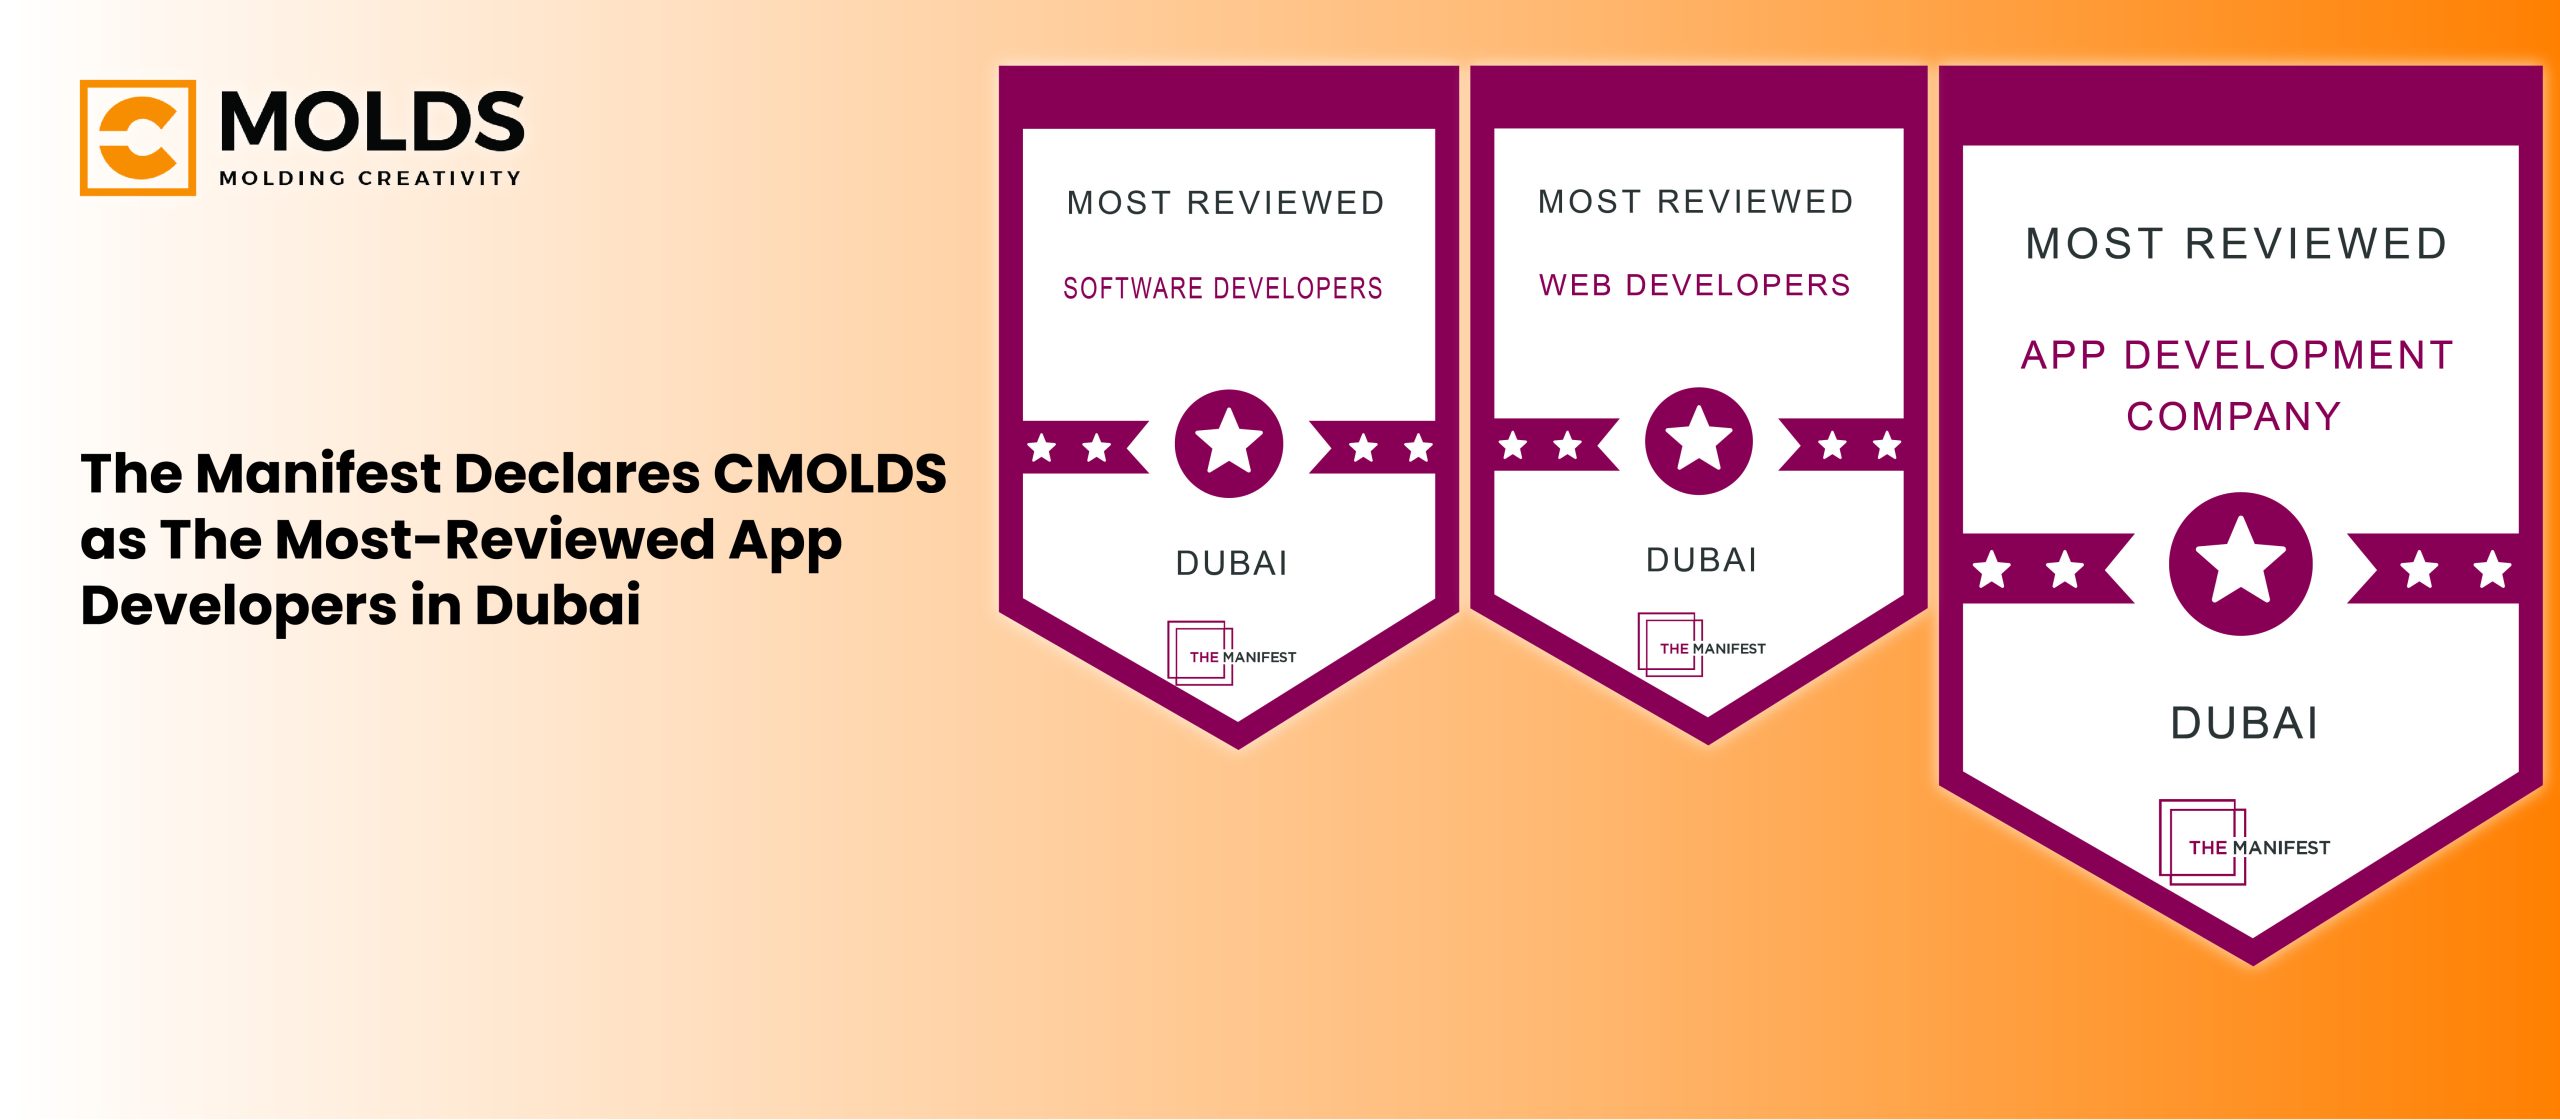 Top App Development Companies in Dubai